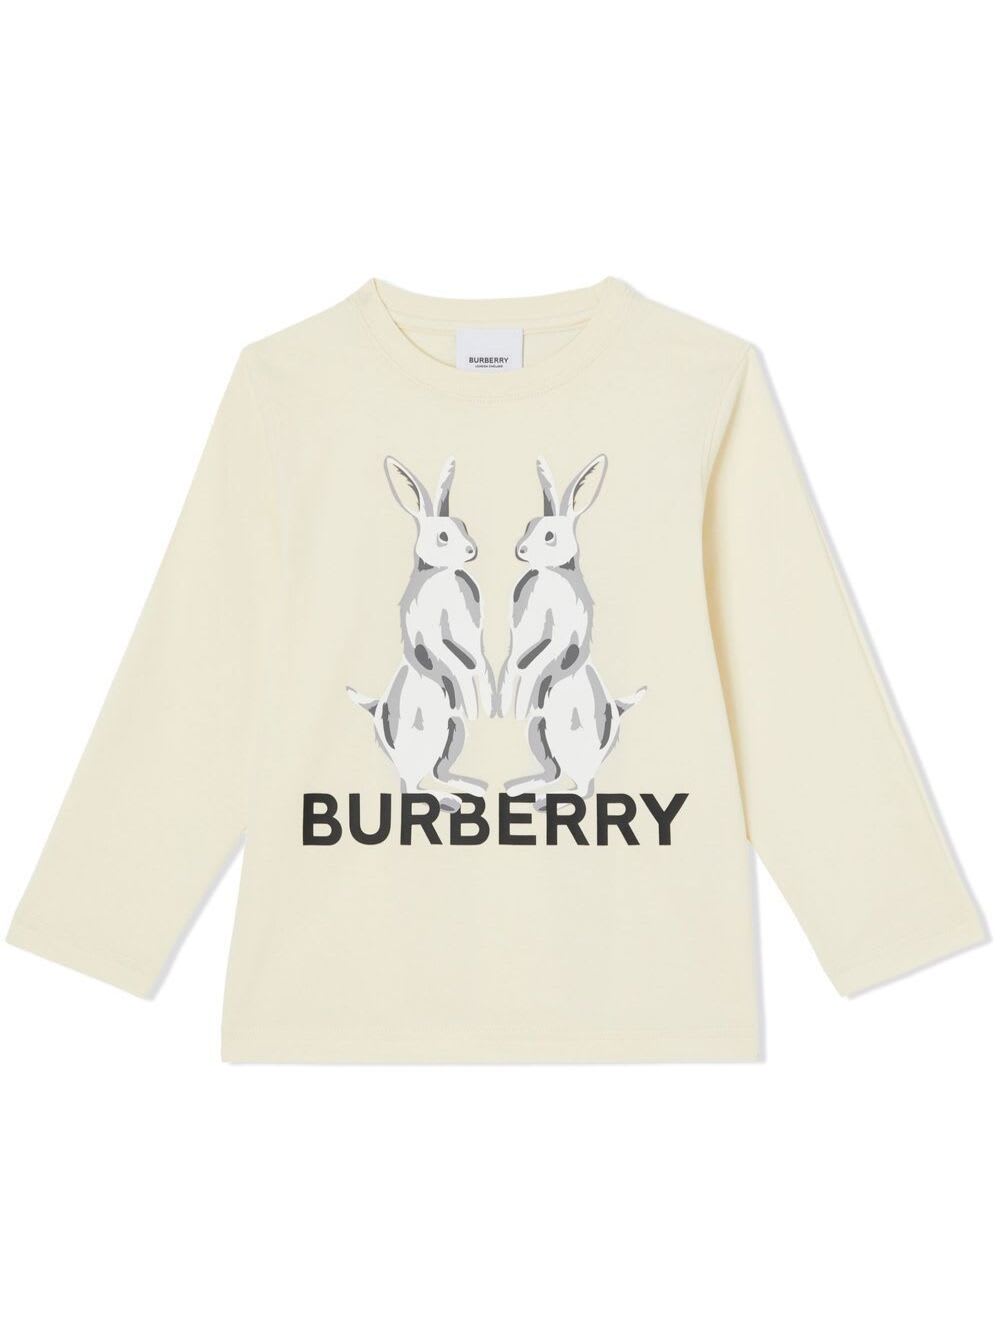 Hare Printed White Cotton T-shirt Girl Burberry Kids